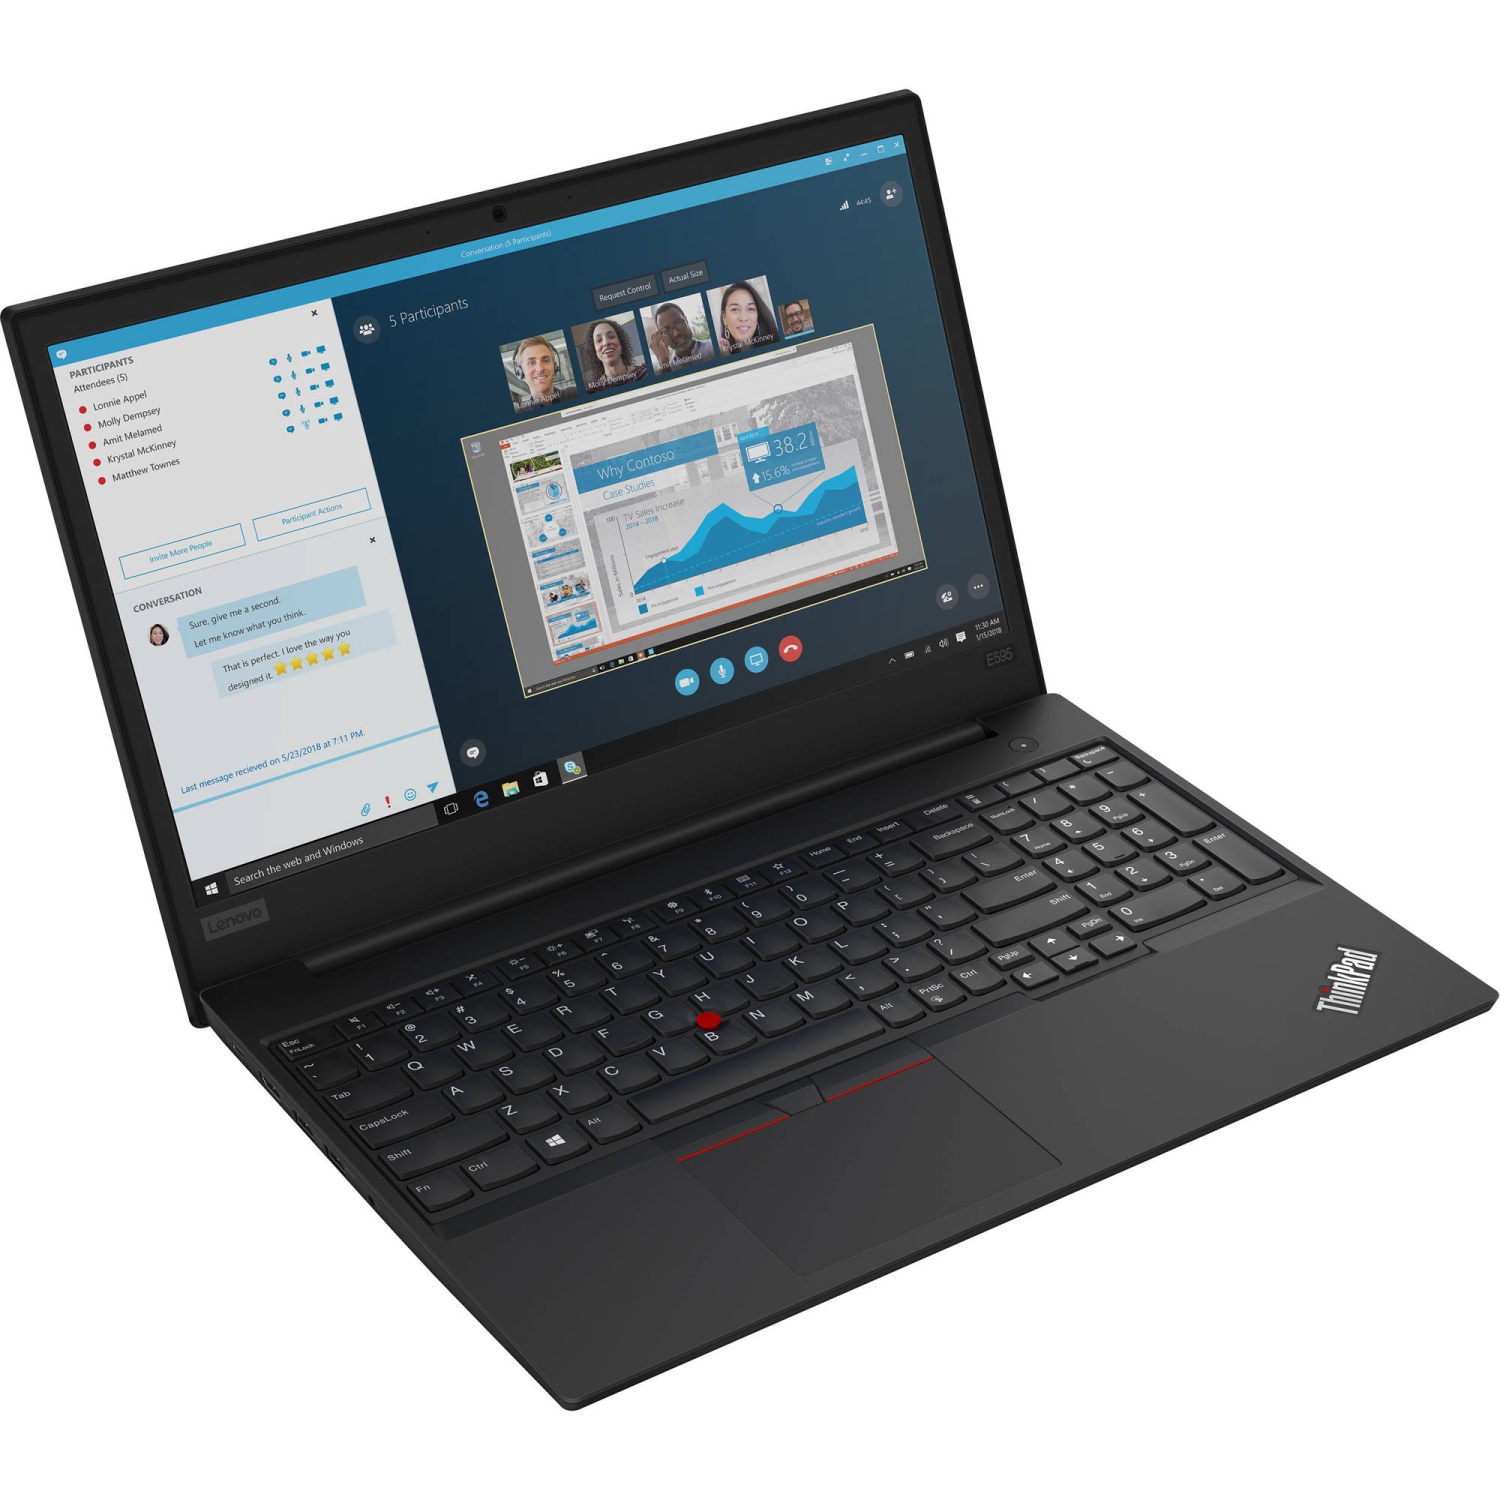 Custom Lenovo ThinkPad E595 Laptop (AMD Ryzen 5 3500U, 8GB RAM, 256GB PCIe SSD + 500GB HDD, AMD Vega 8, Win 10 Pro)